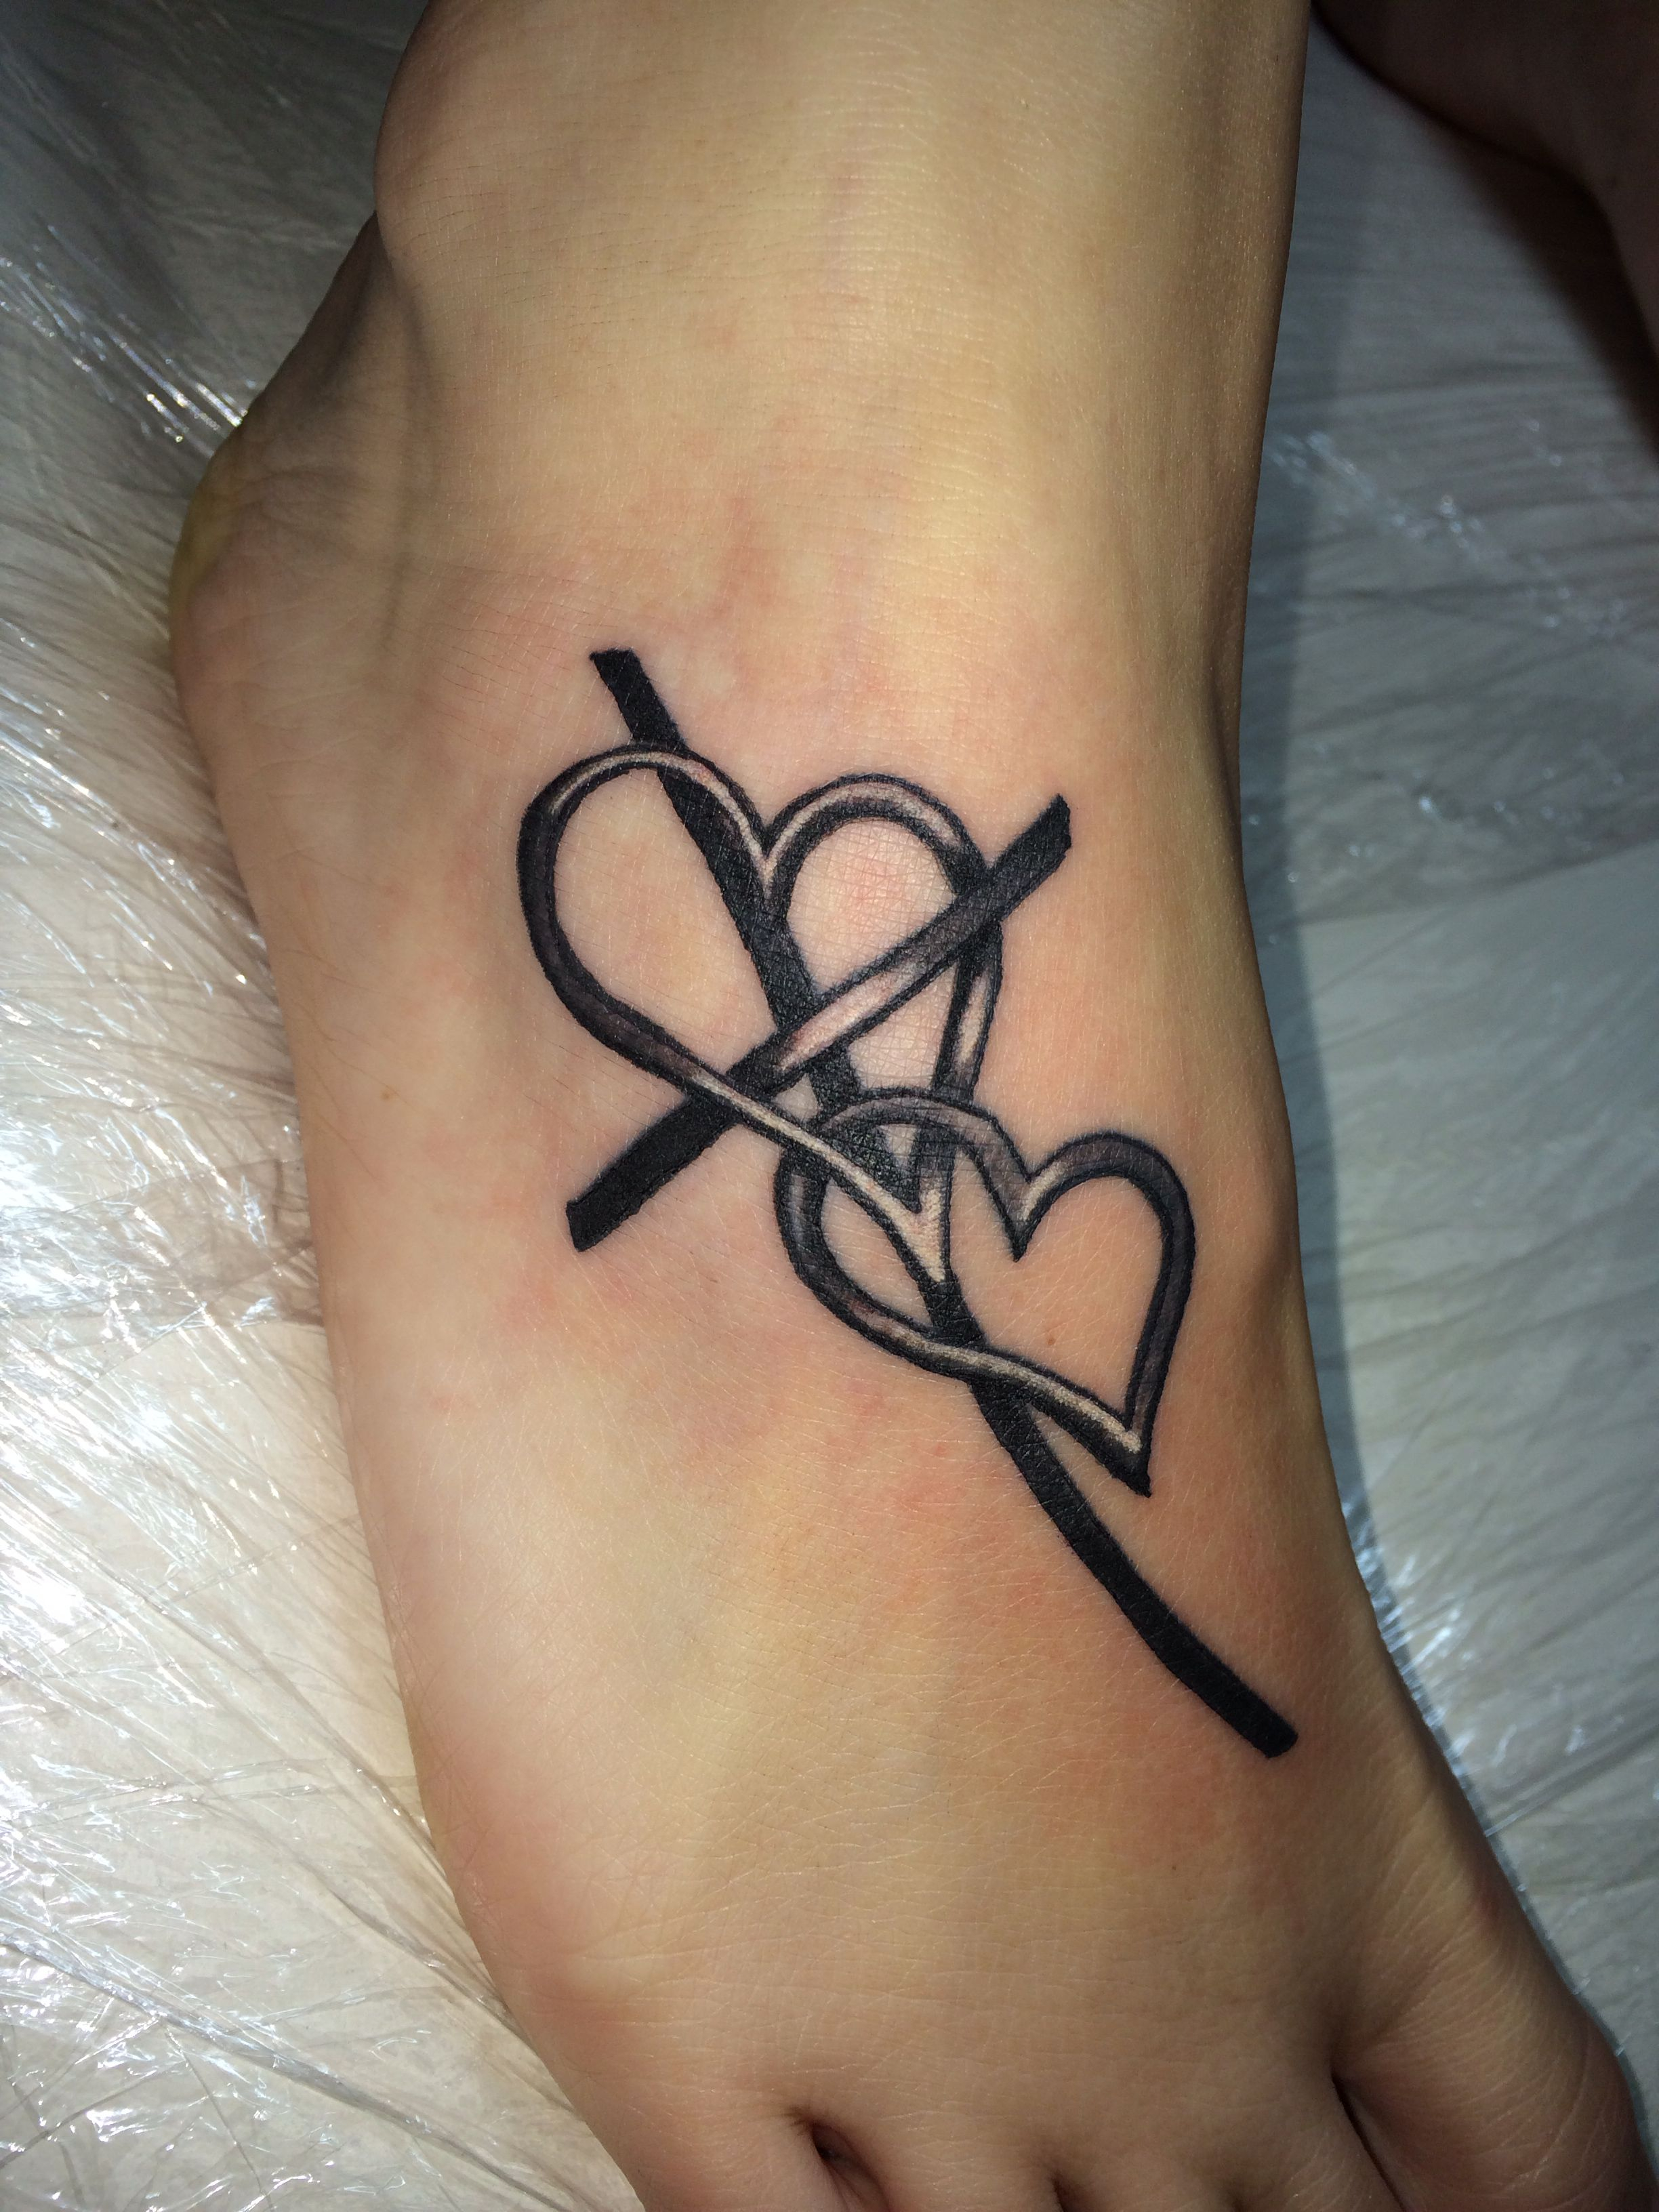 Cross Tattoo Cross With Heart Tattoo Foot Tattoo Tattoos for proportions 2448 X 3264